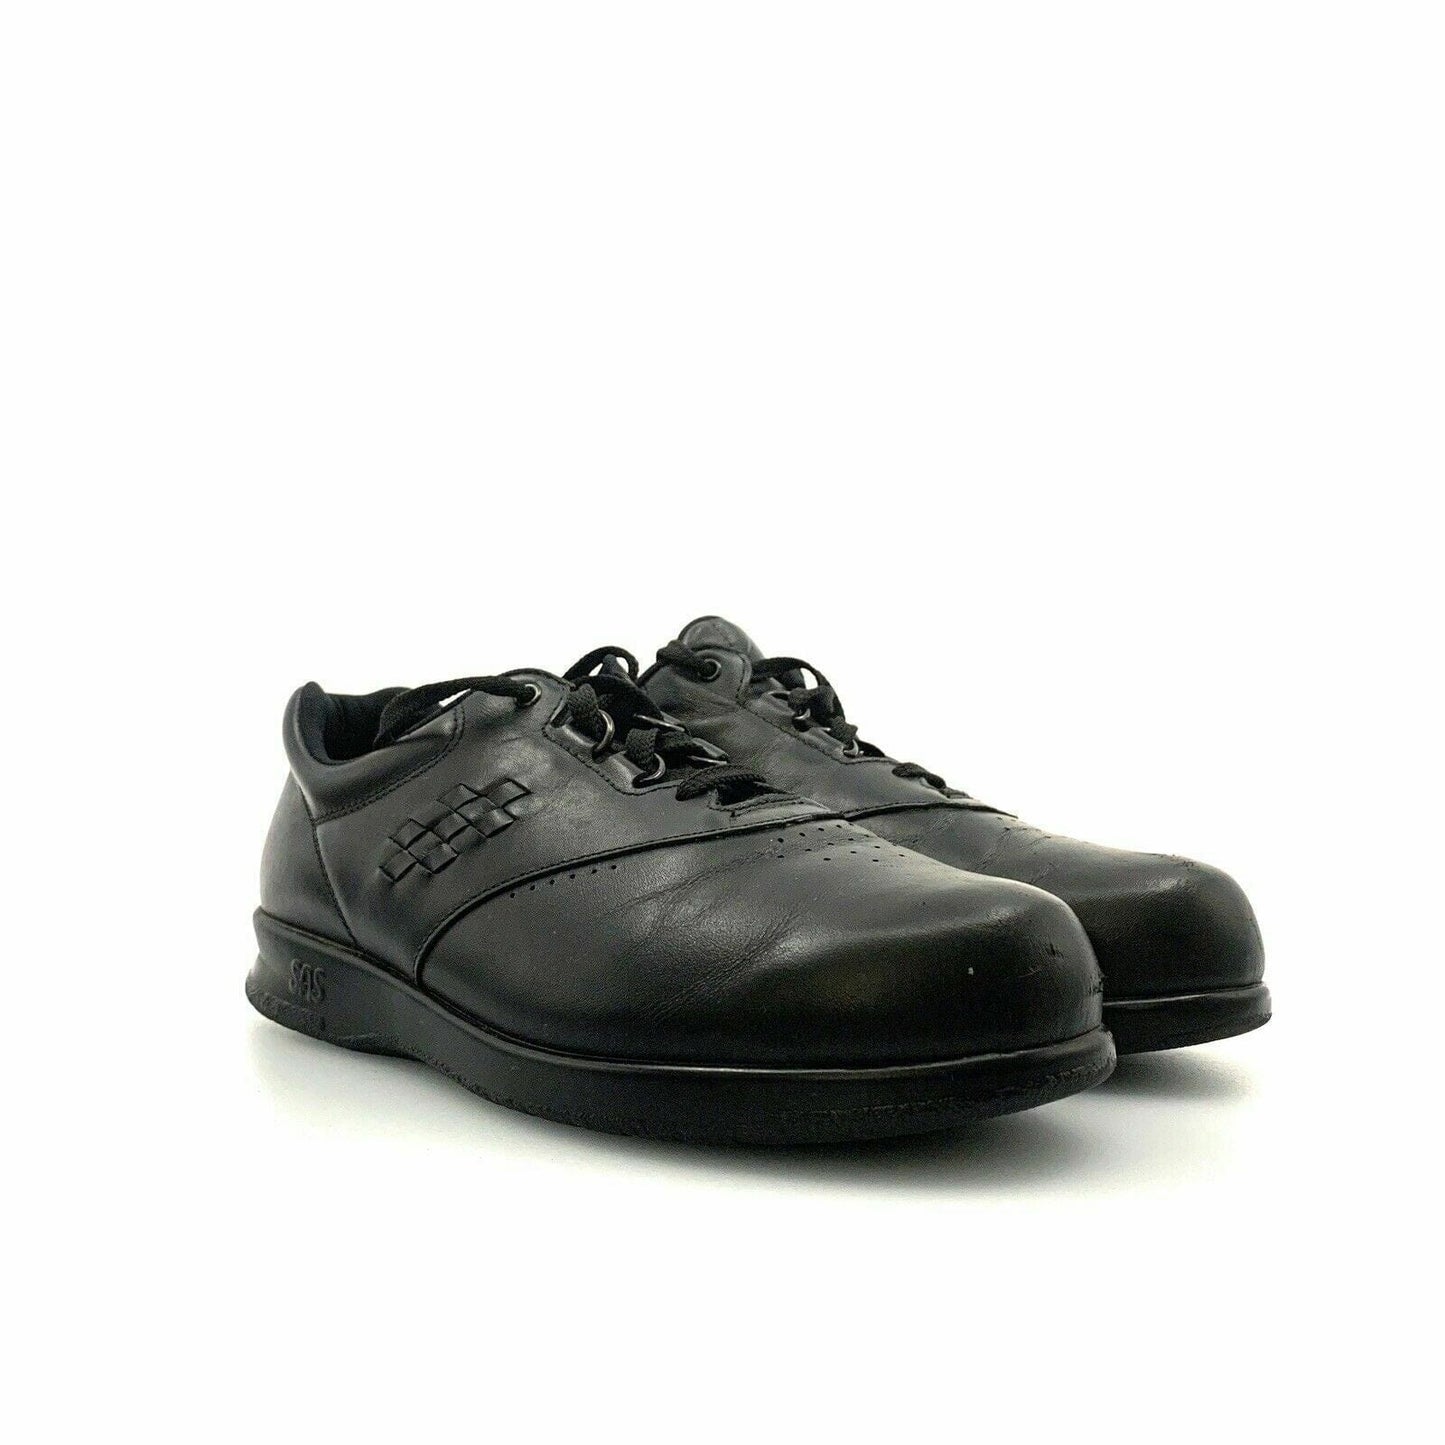 SAS Womens Size 9.5M Black Free Time Lace Up Diabetic Shoes Walking Comfort